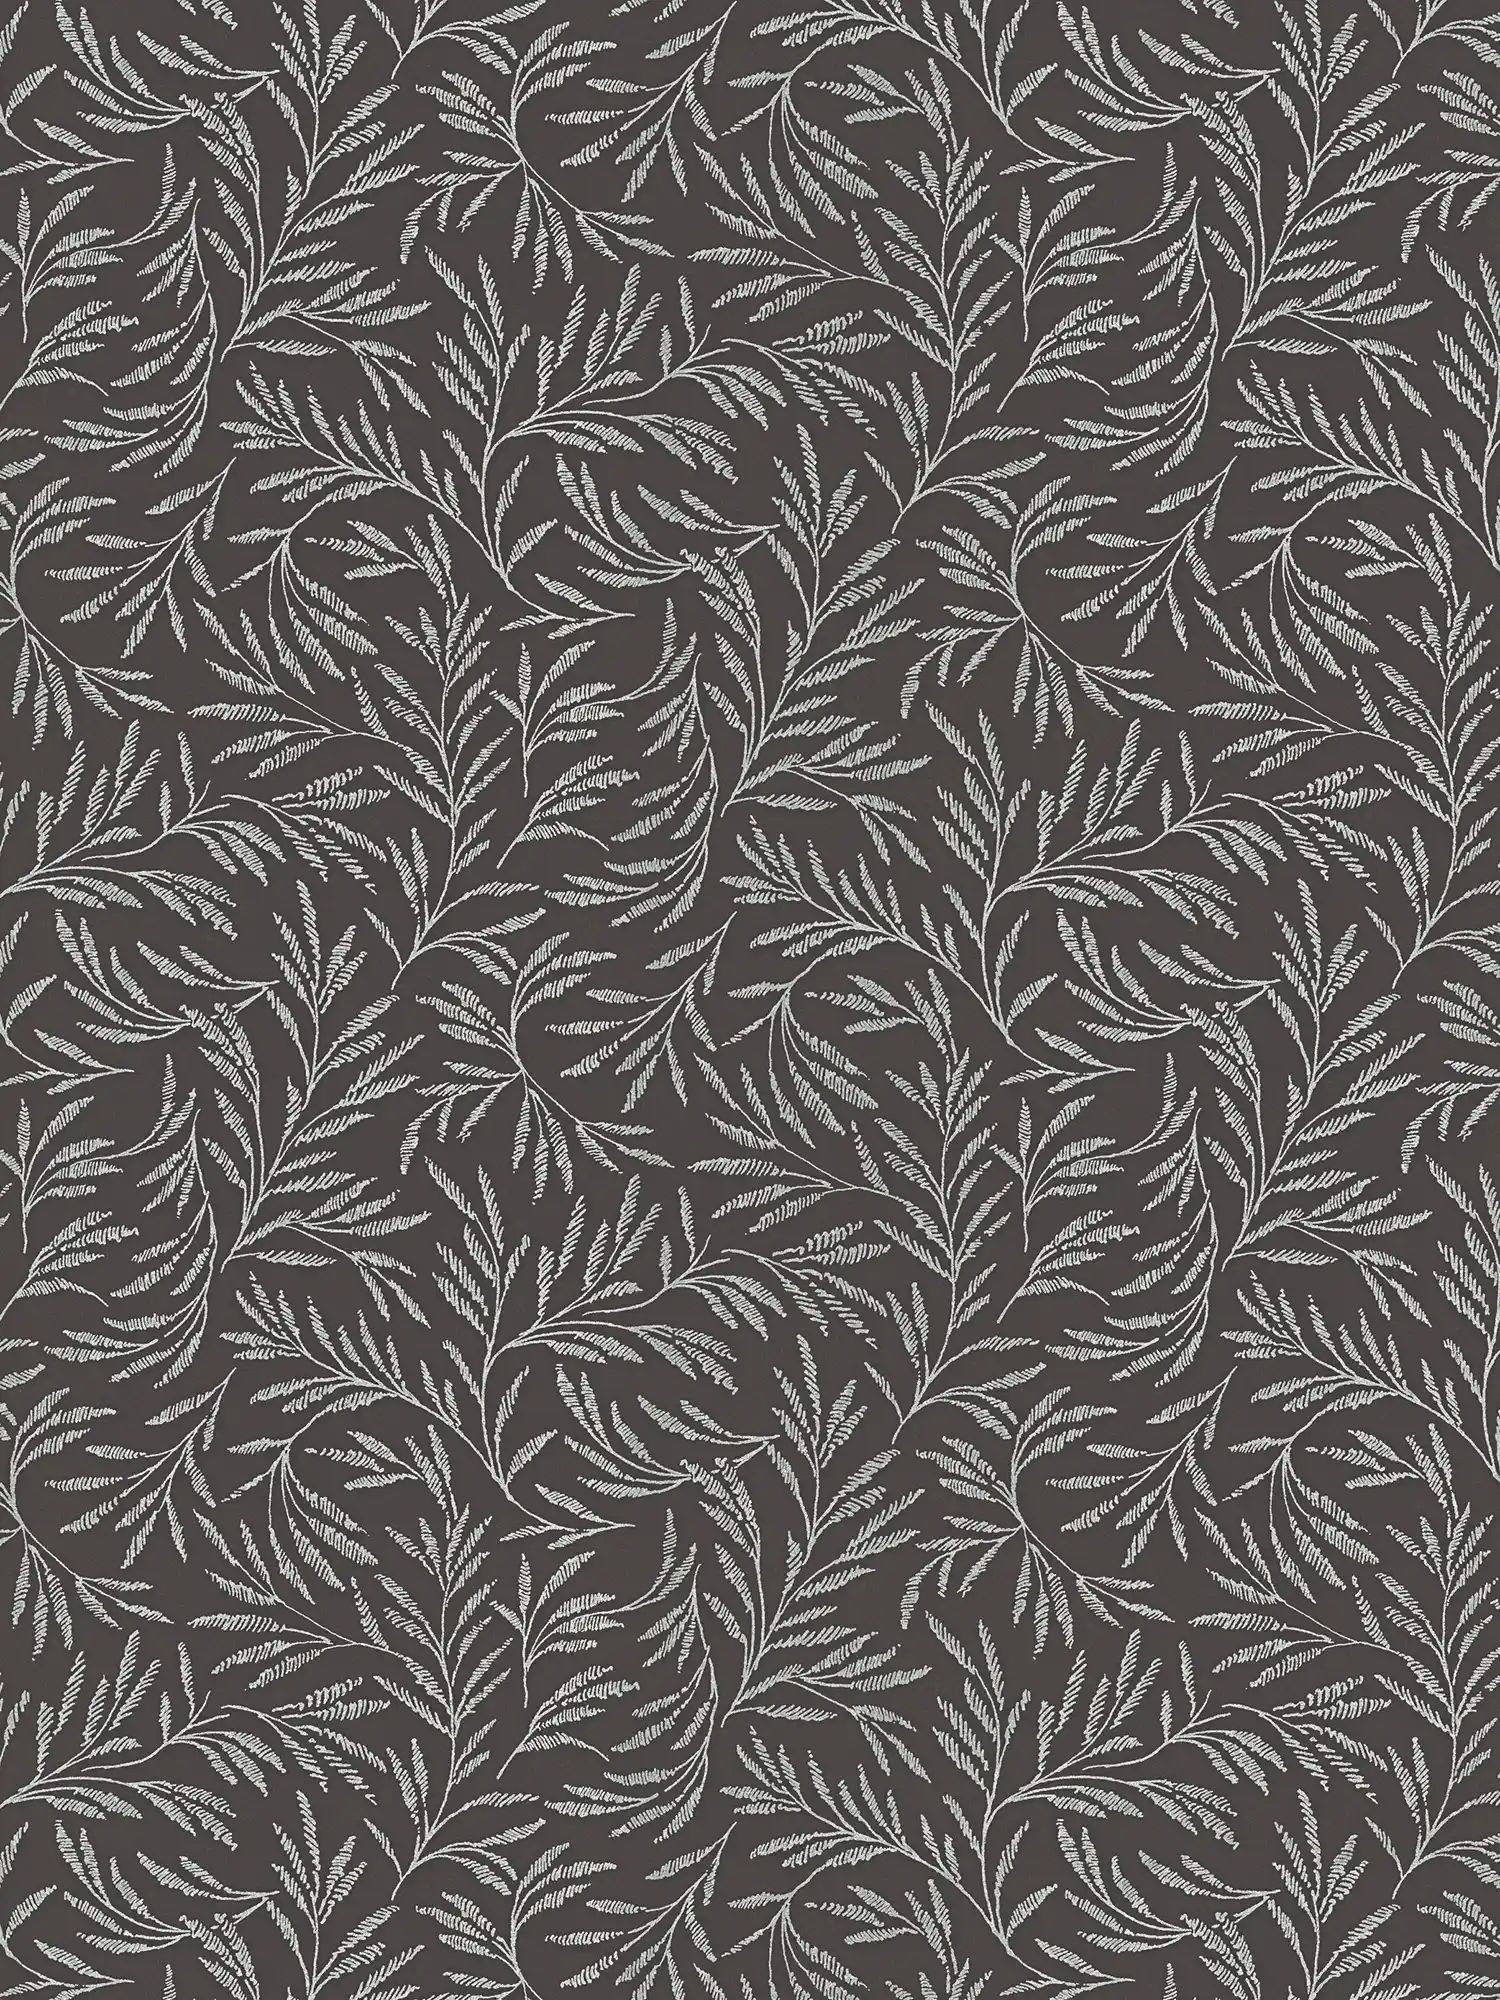 Vlie wallpaper metallic pattern with leaf tendrils - metallic, black
